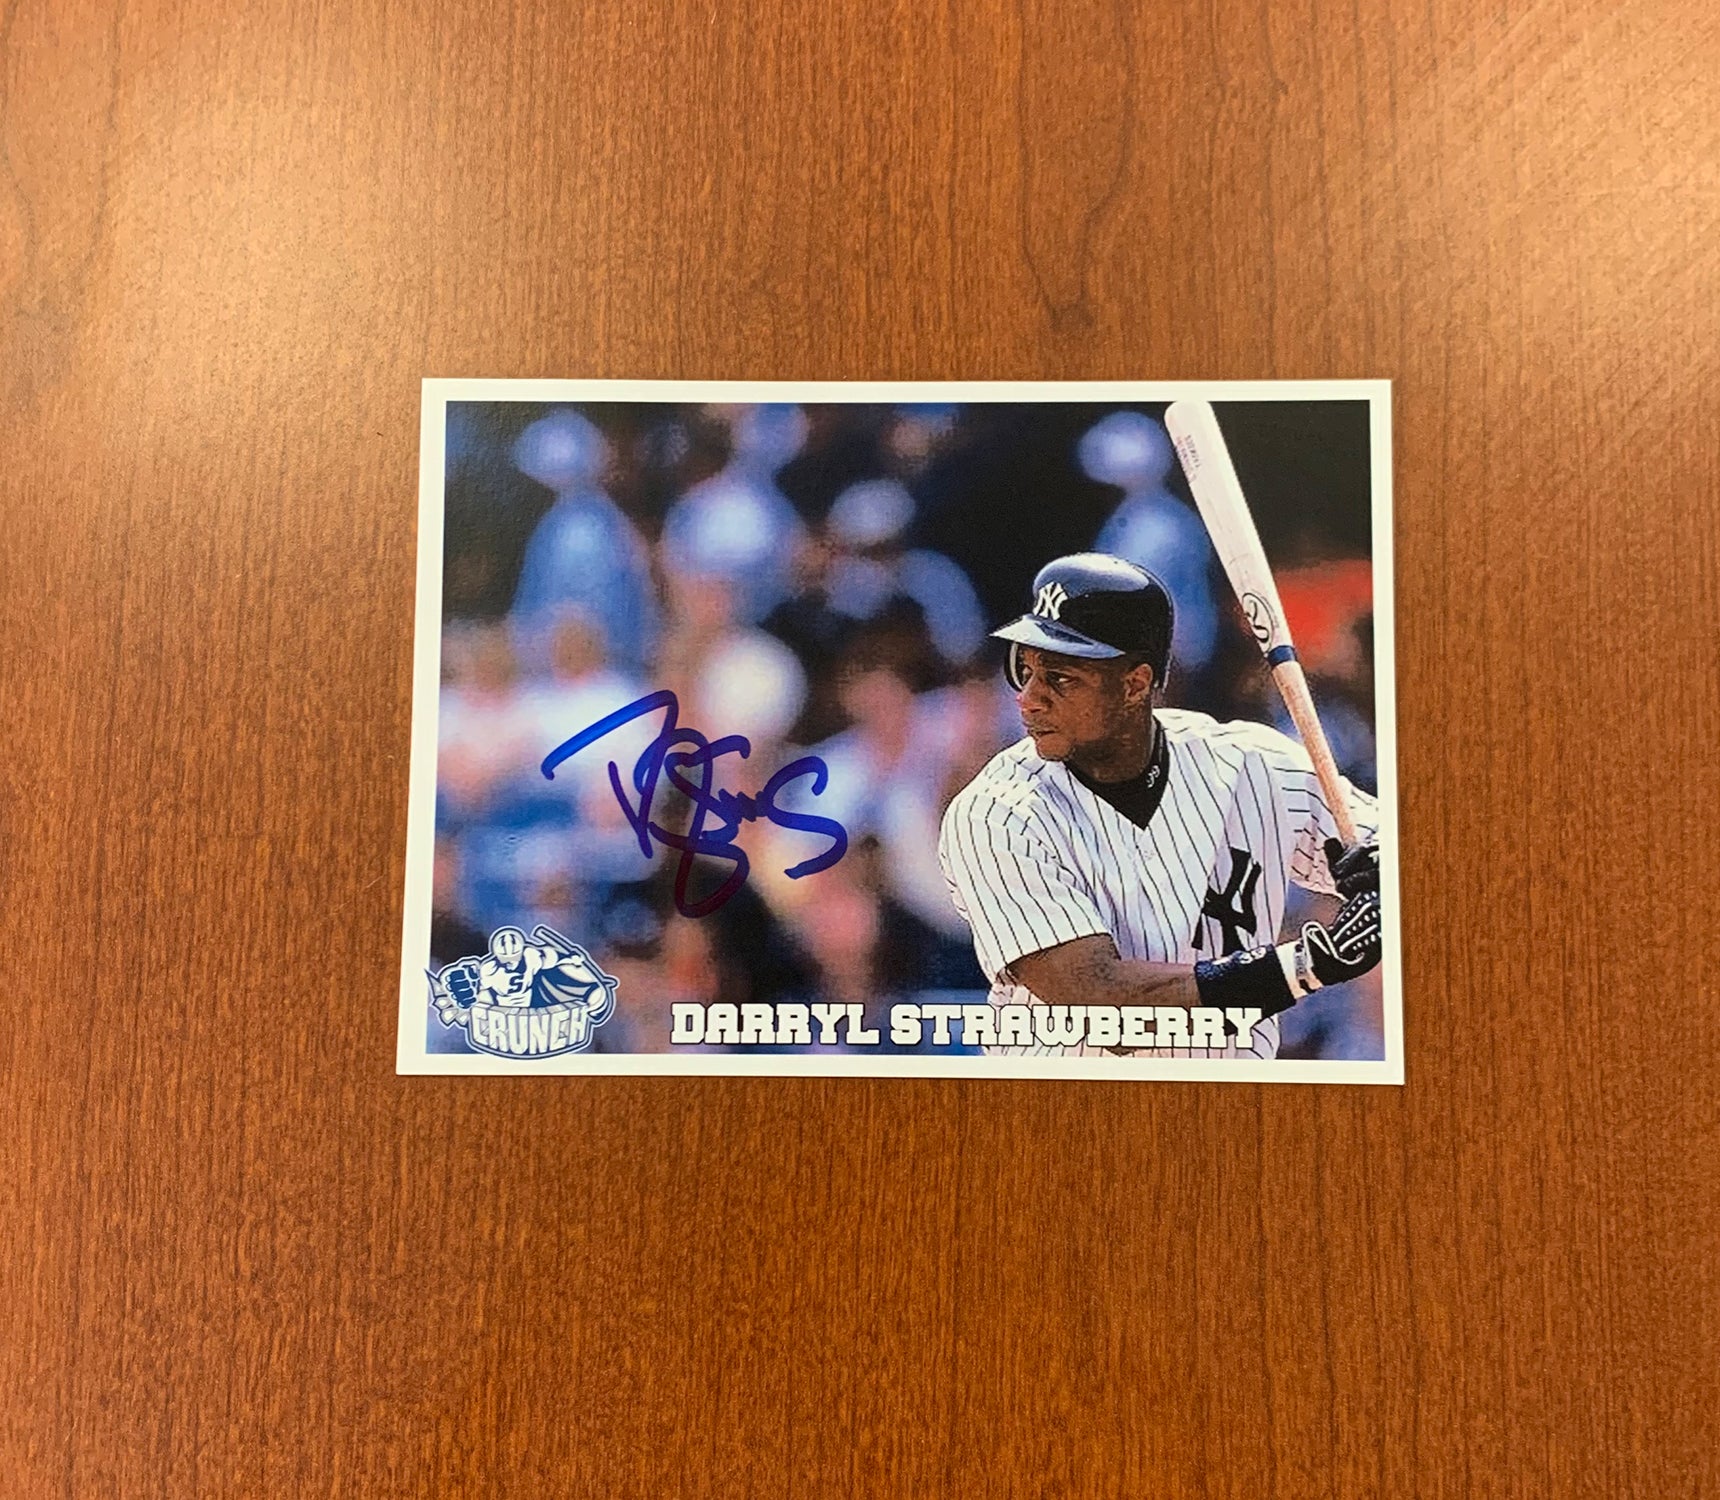 darryl strawberry autographed baseball